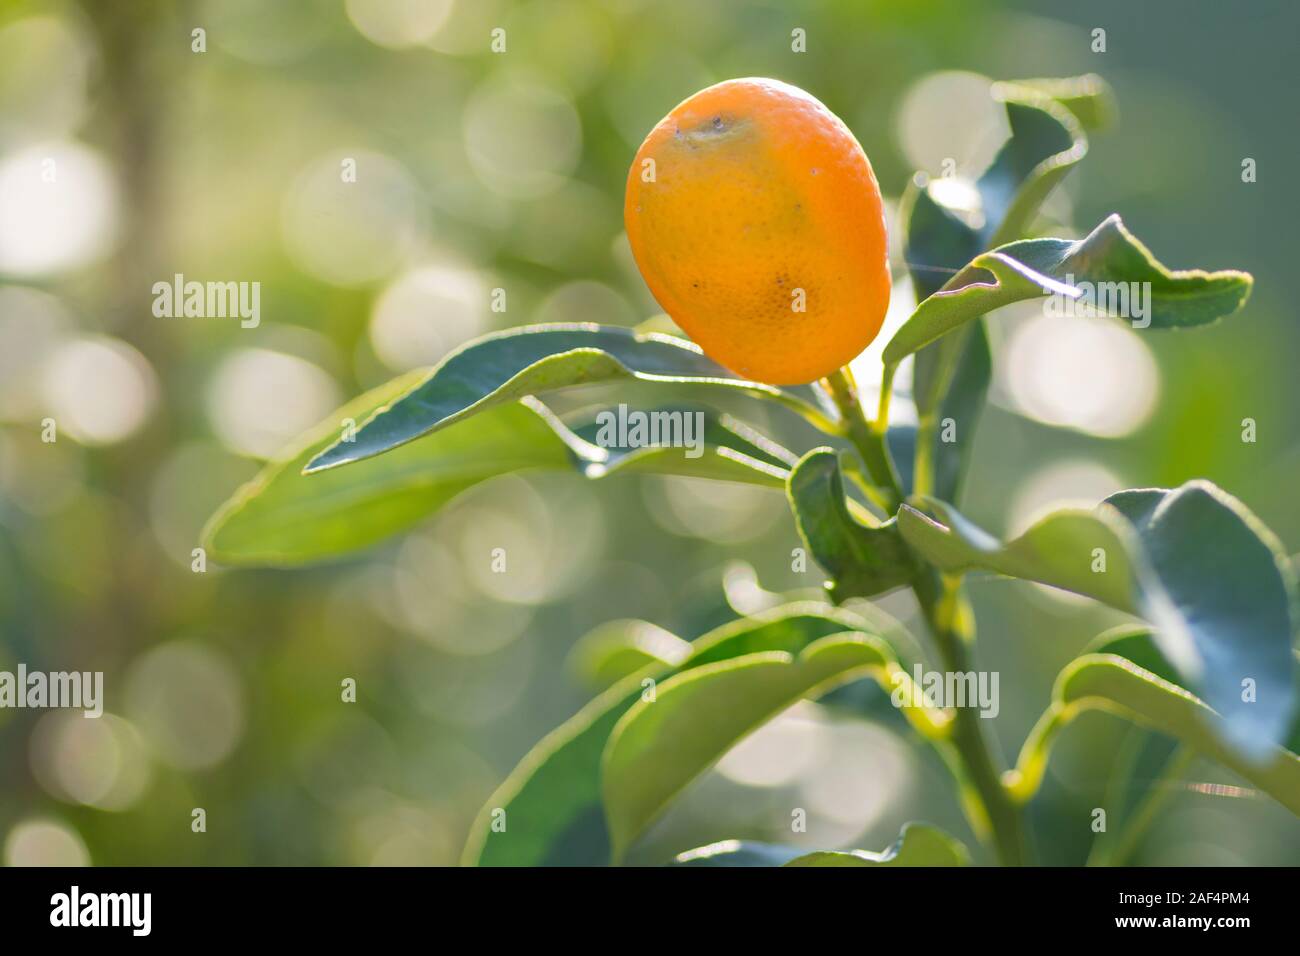 Single Kumquat (Citrus japonica) fruit, ripe and ready for harvest Stock Photo